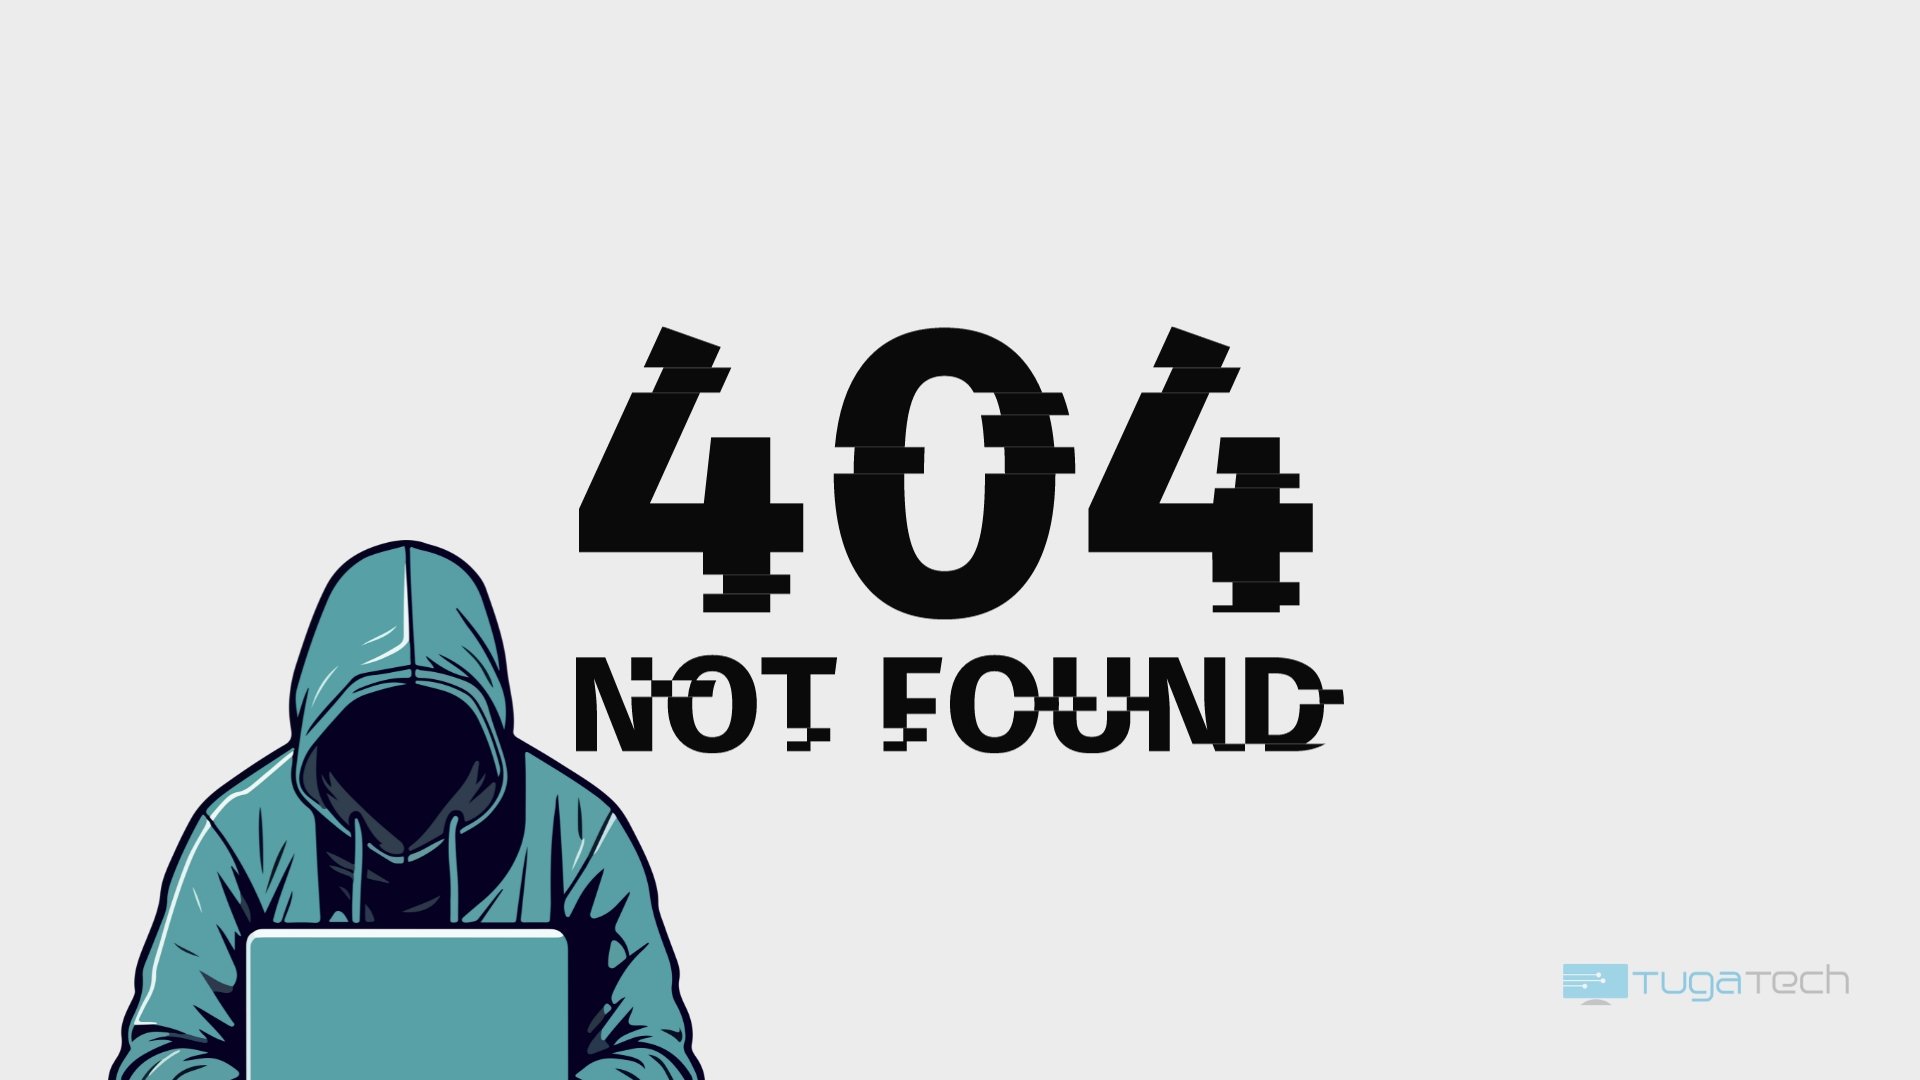 Página 404 com hacker